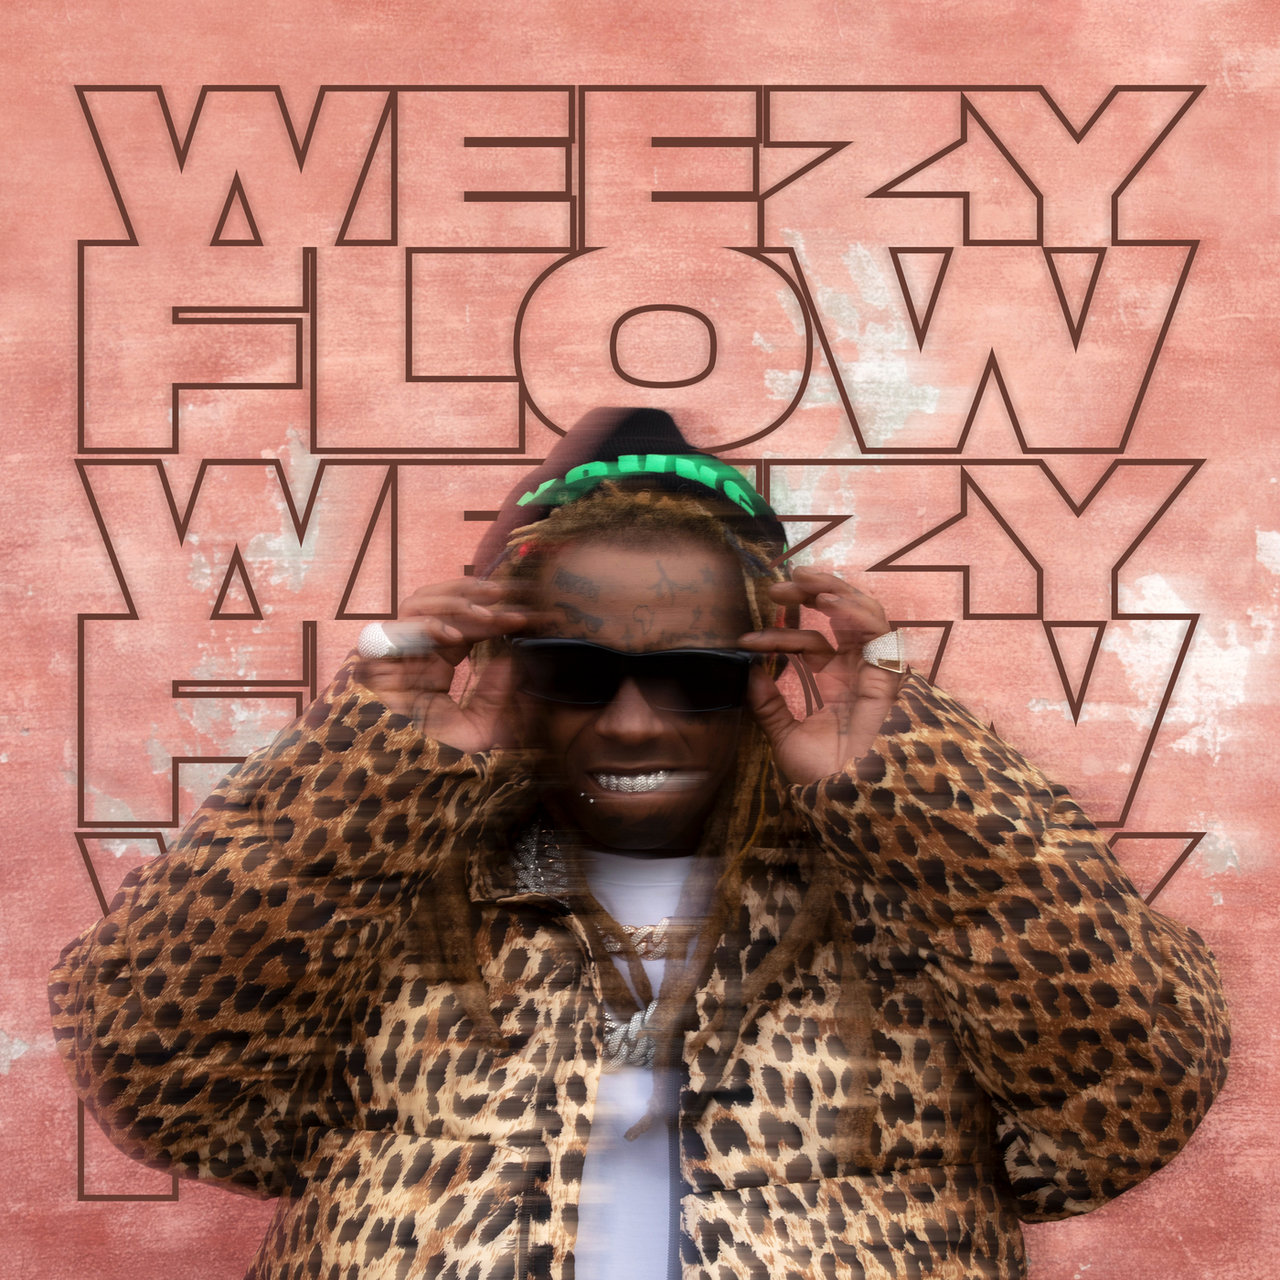 Lil Wayne - Weezy Flow (Cover)